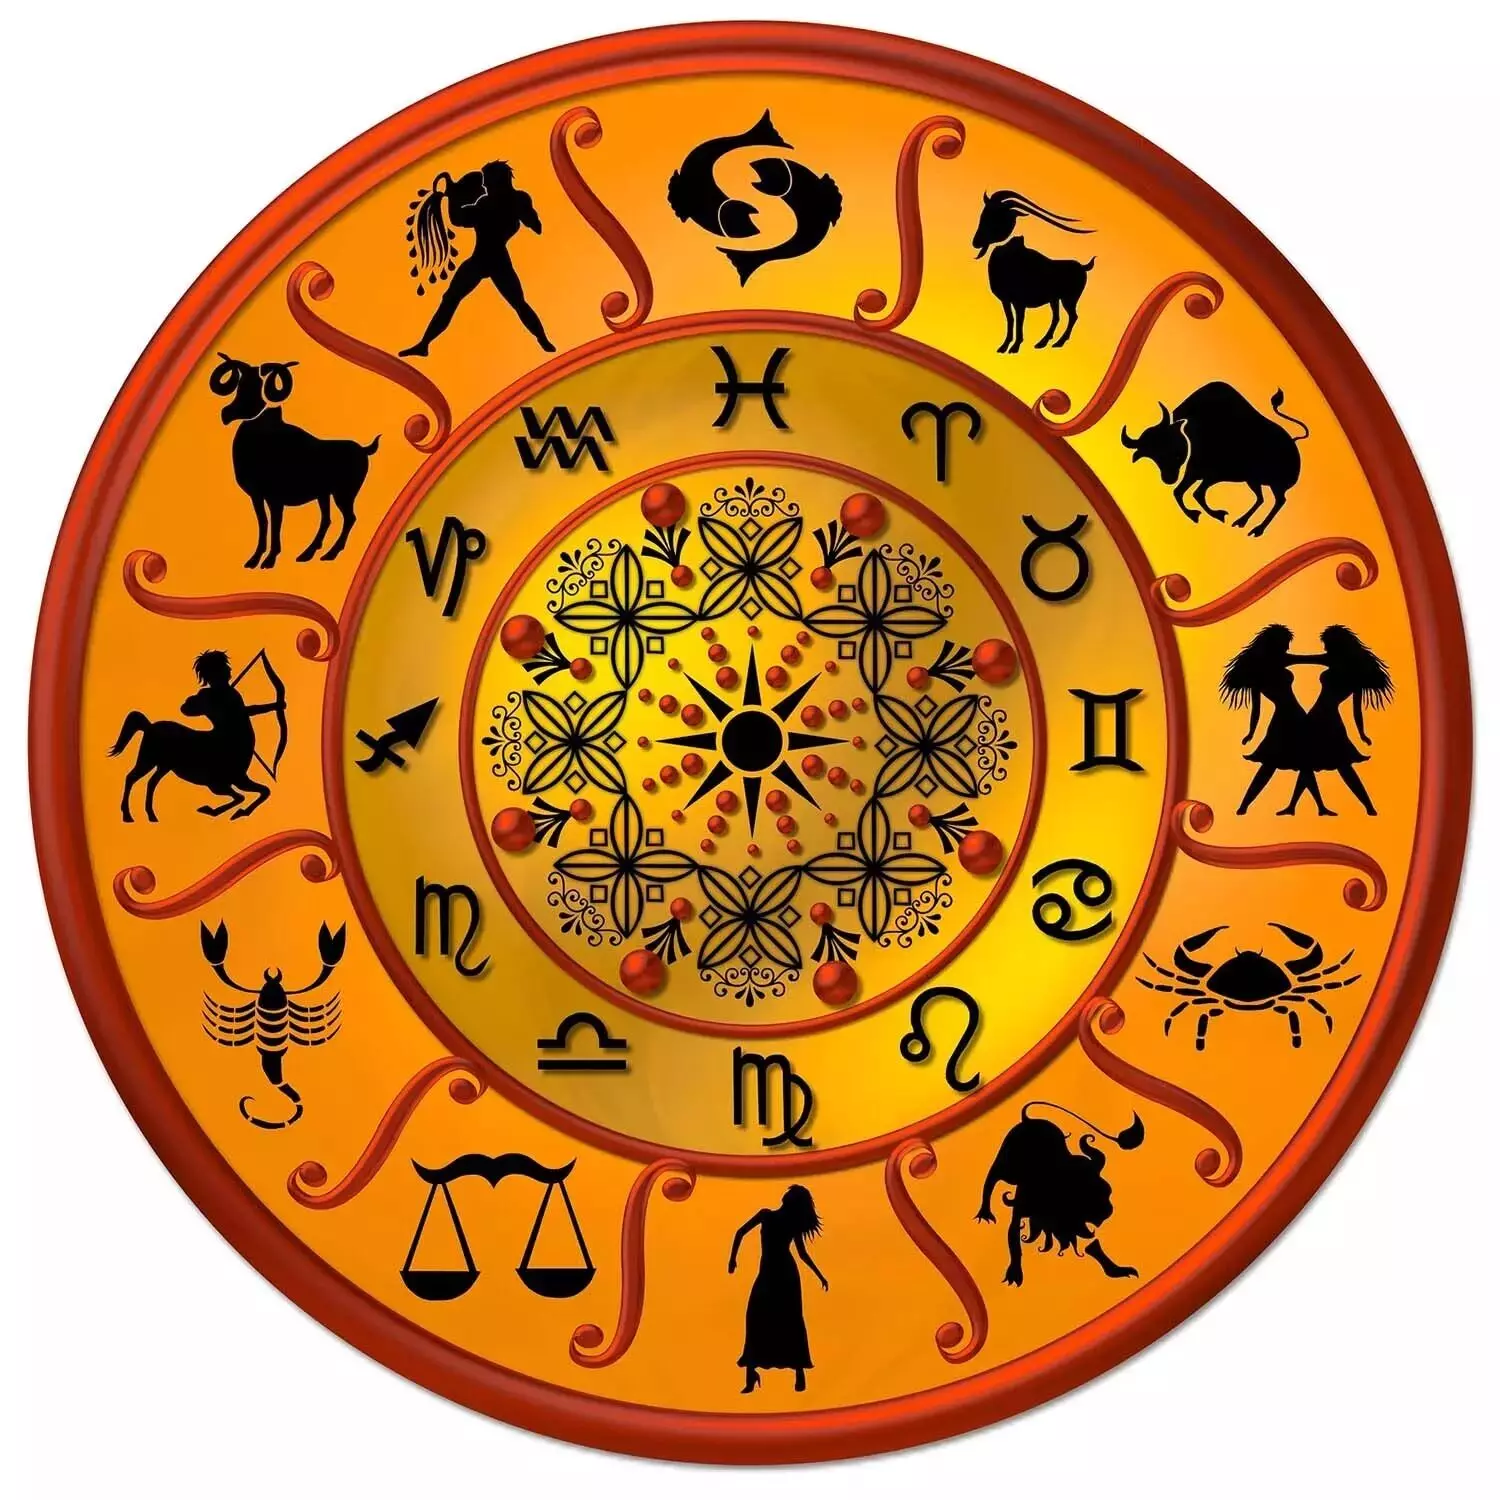 04  Novembar  – Know your todays horoscope